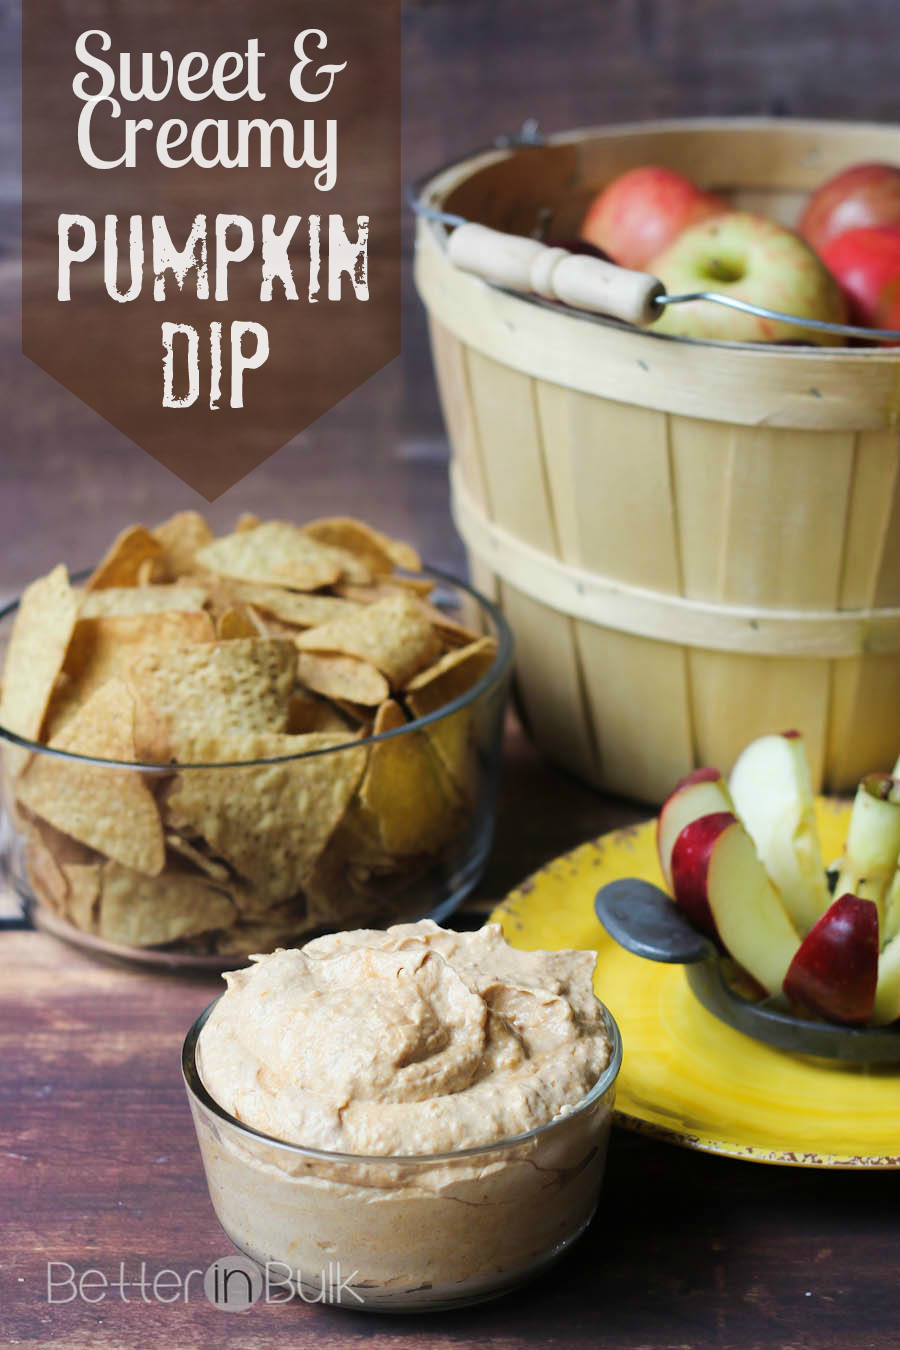 Sweet and creamy pumpkin dip recipe by Better in Bulk